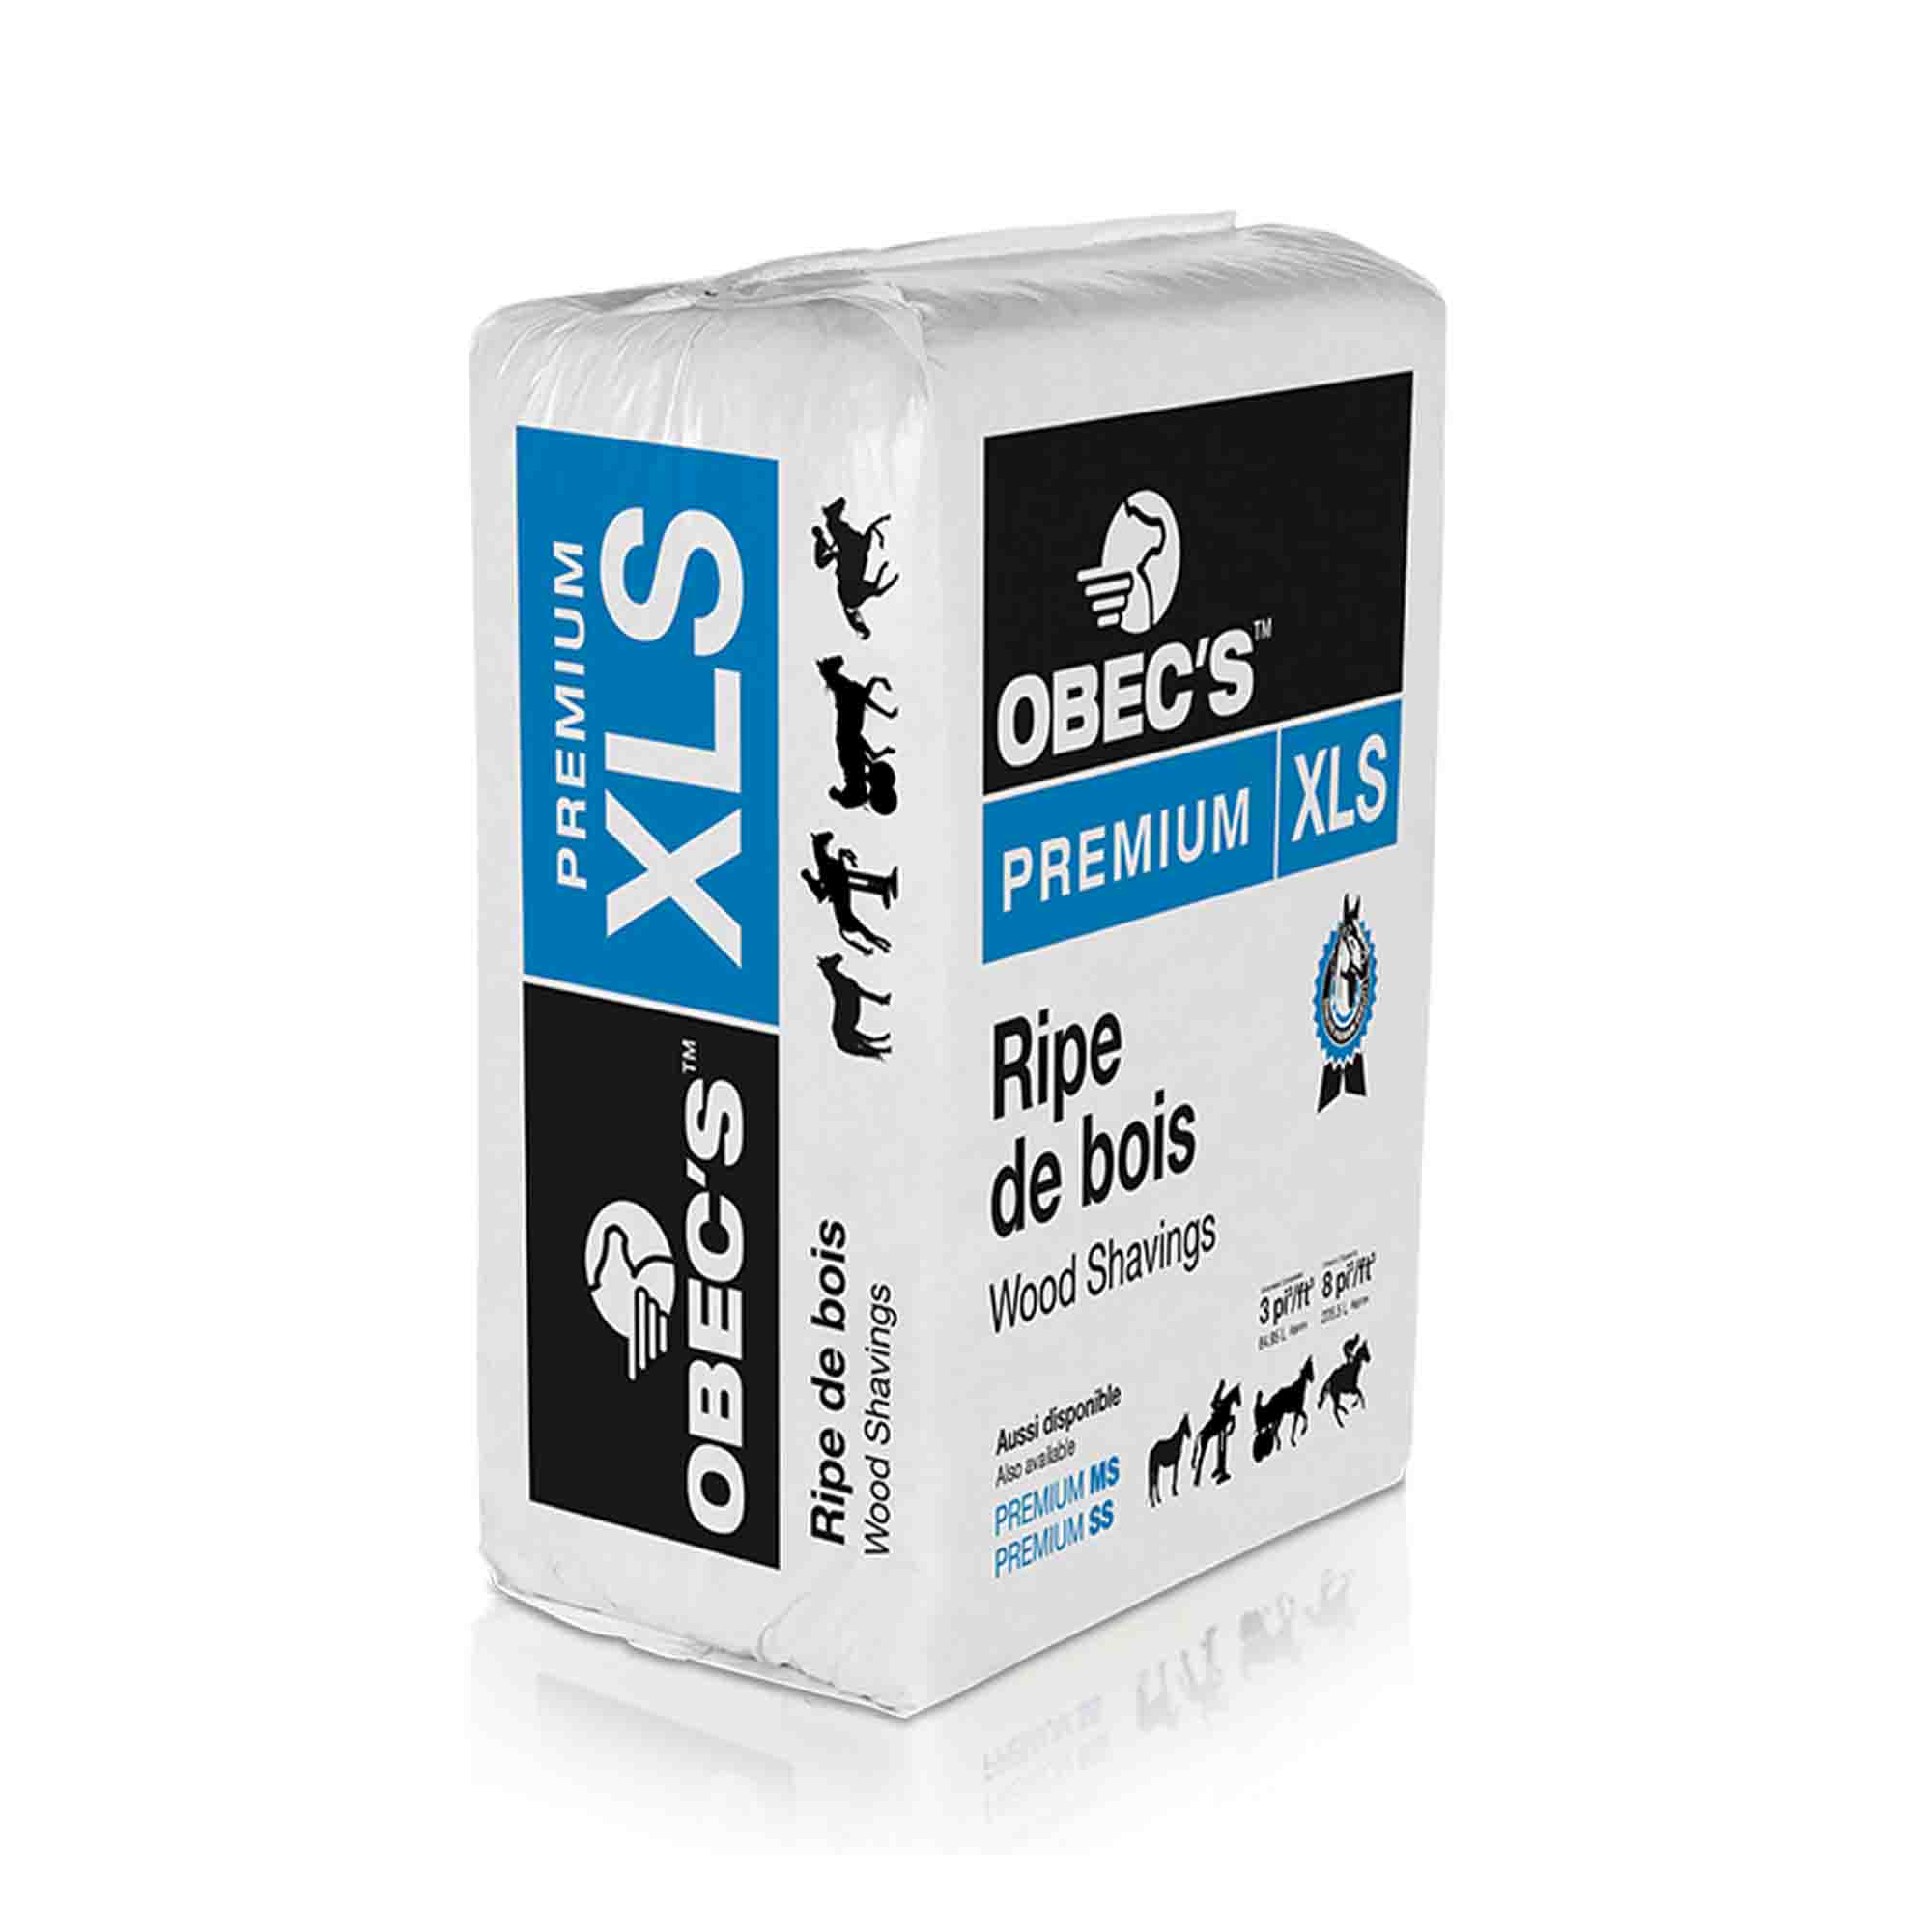 Rip-O-Bec Premium XLS 3 ft3 Wood Shavings - Dust-Free